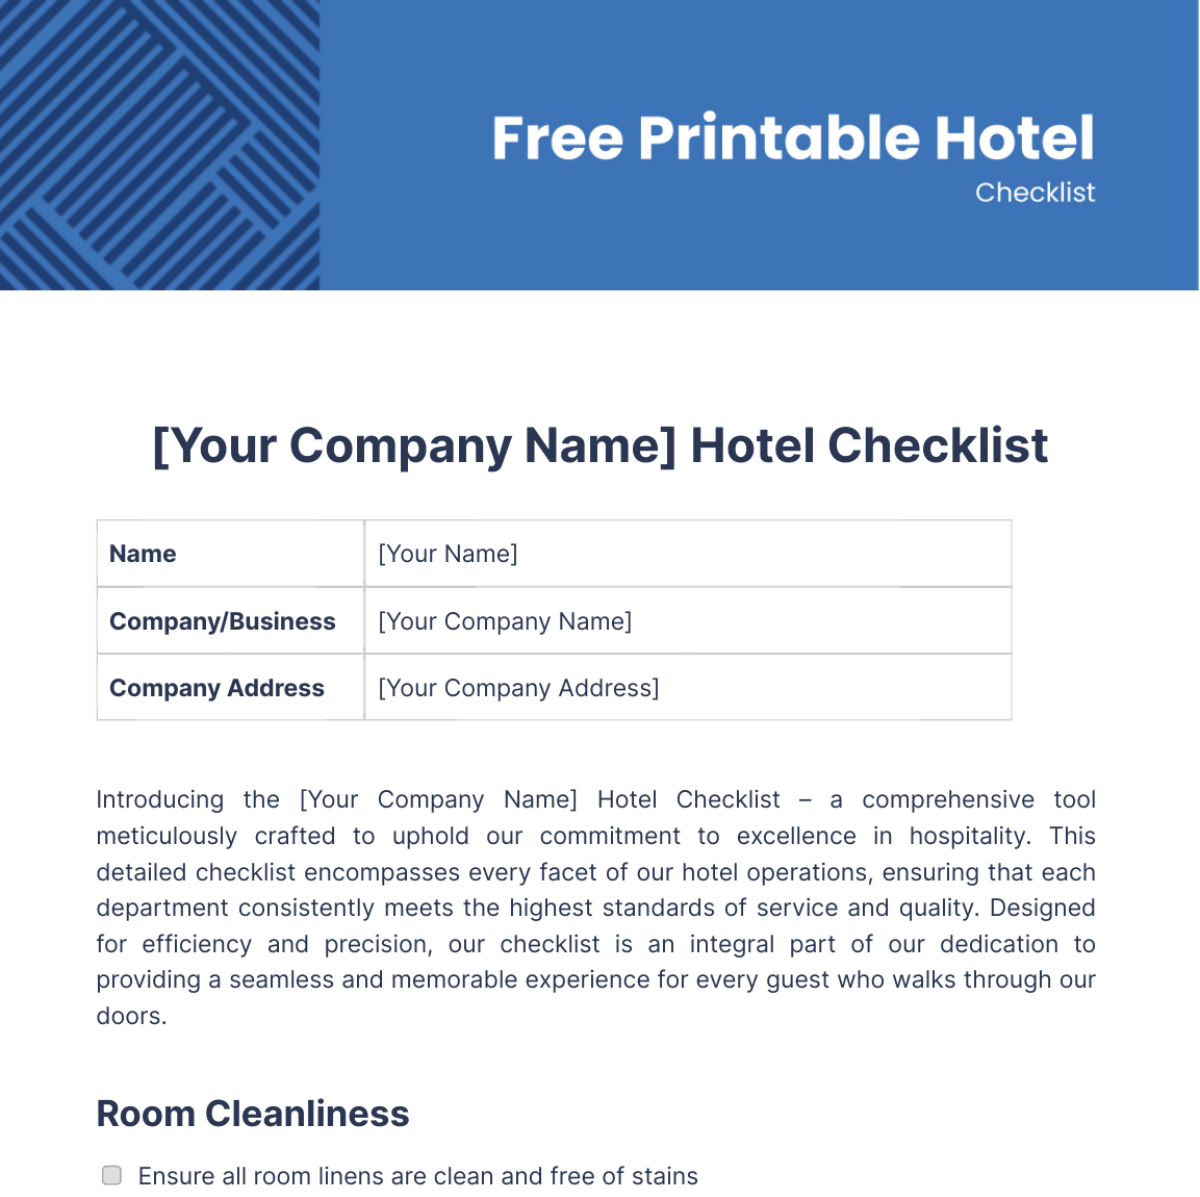 Free Printable Hotel Checklist Template